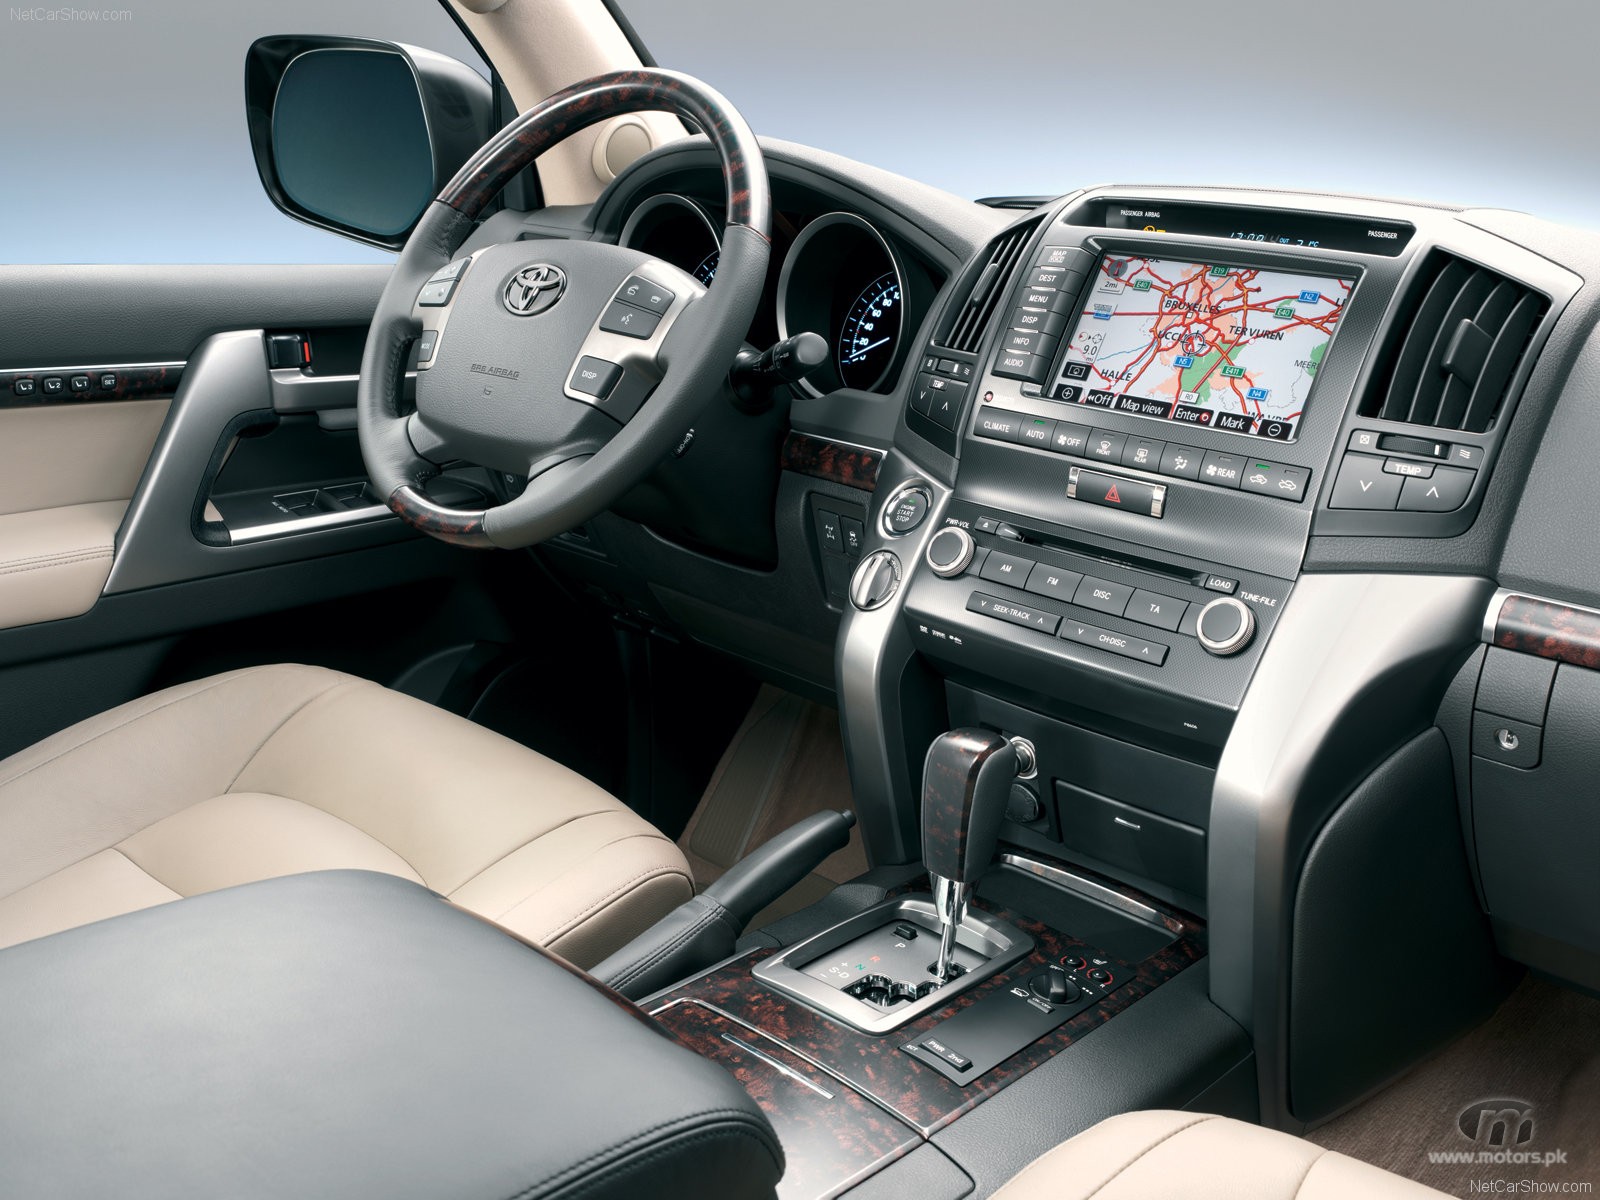 Toyota Land Cruiser interior view